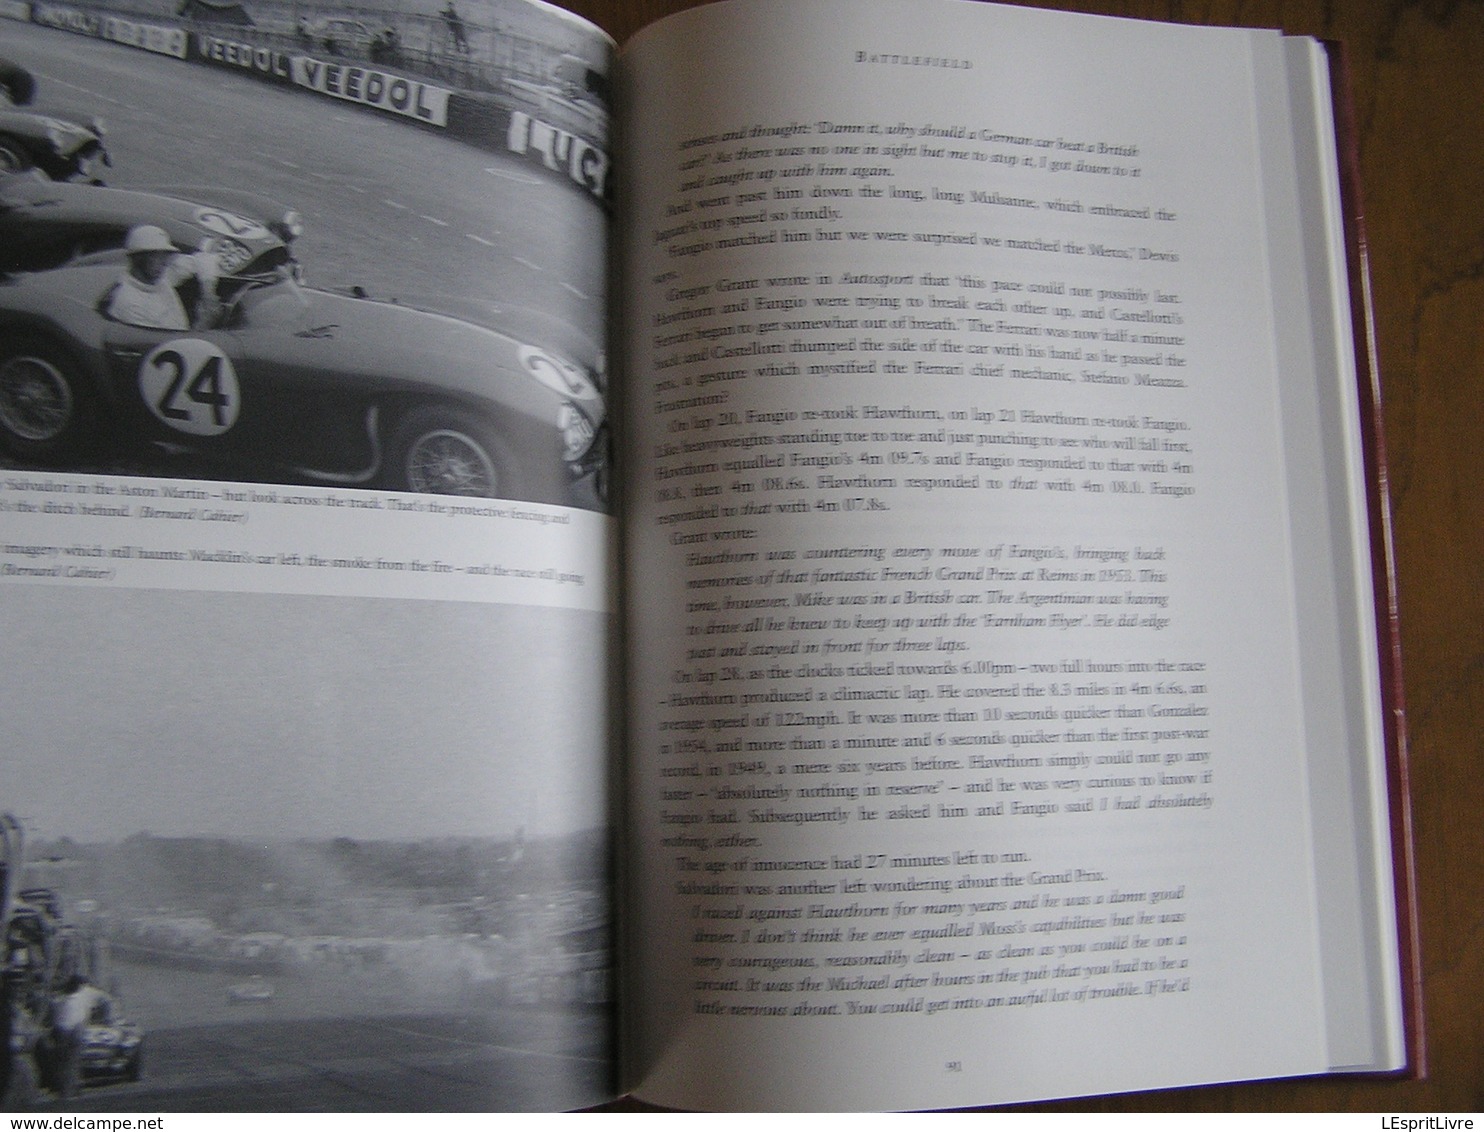 LE MANS ' 55 Racing Cars Course Automobile France Crash Accident Automobile Auto Le Mans 1955 France Motor Racing Race